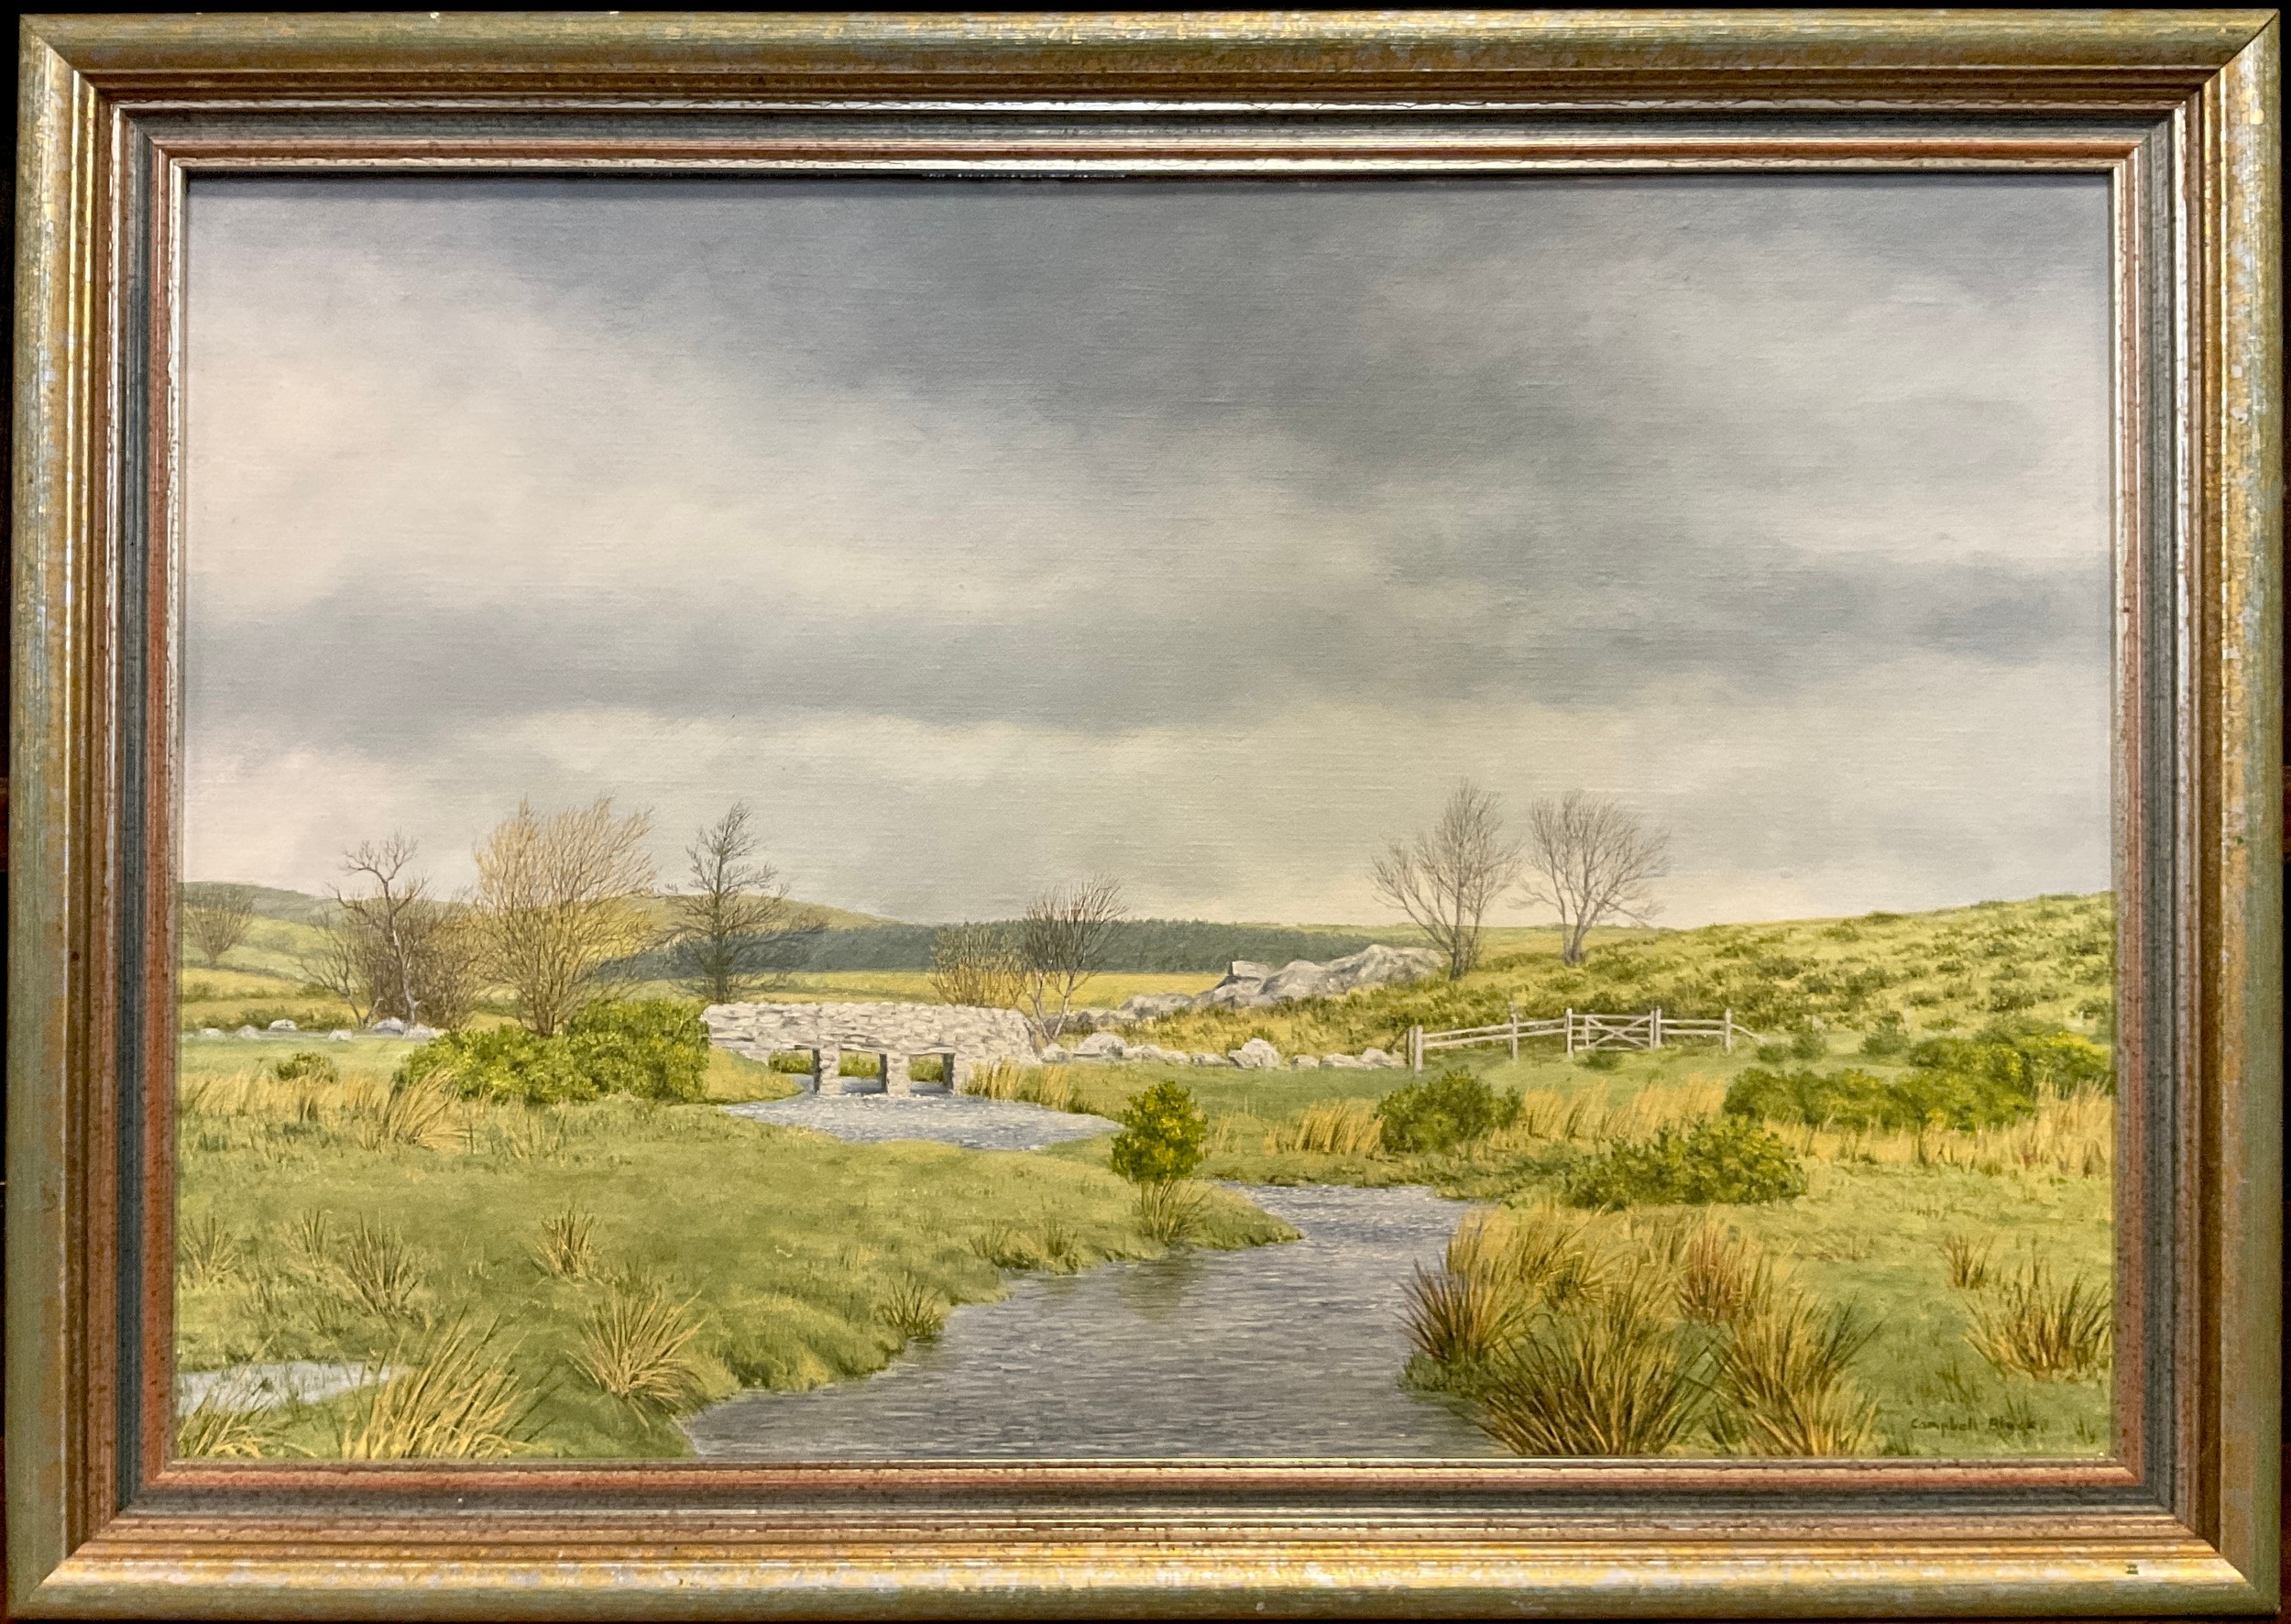 Geoffrey Campbell-Black, The Clapper Bridge, the East Dart, signed, oil on canvas, 40.5cm x 61cm.